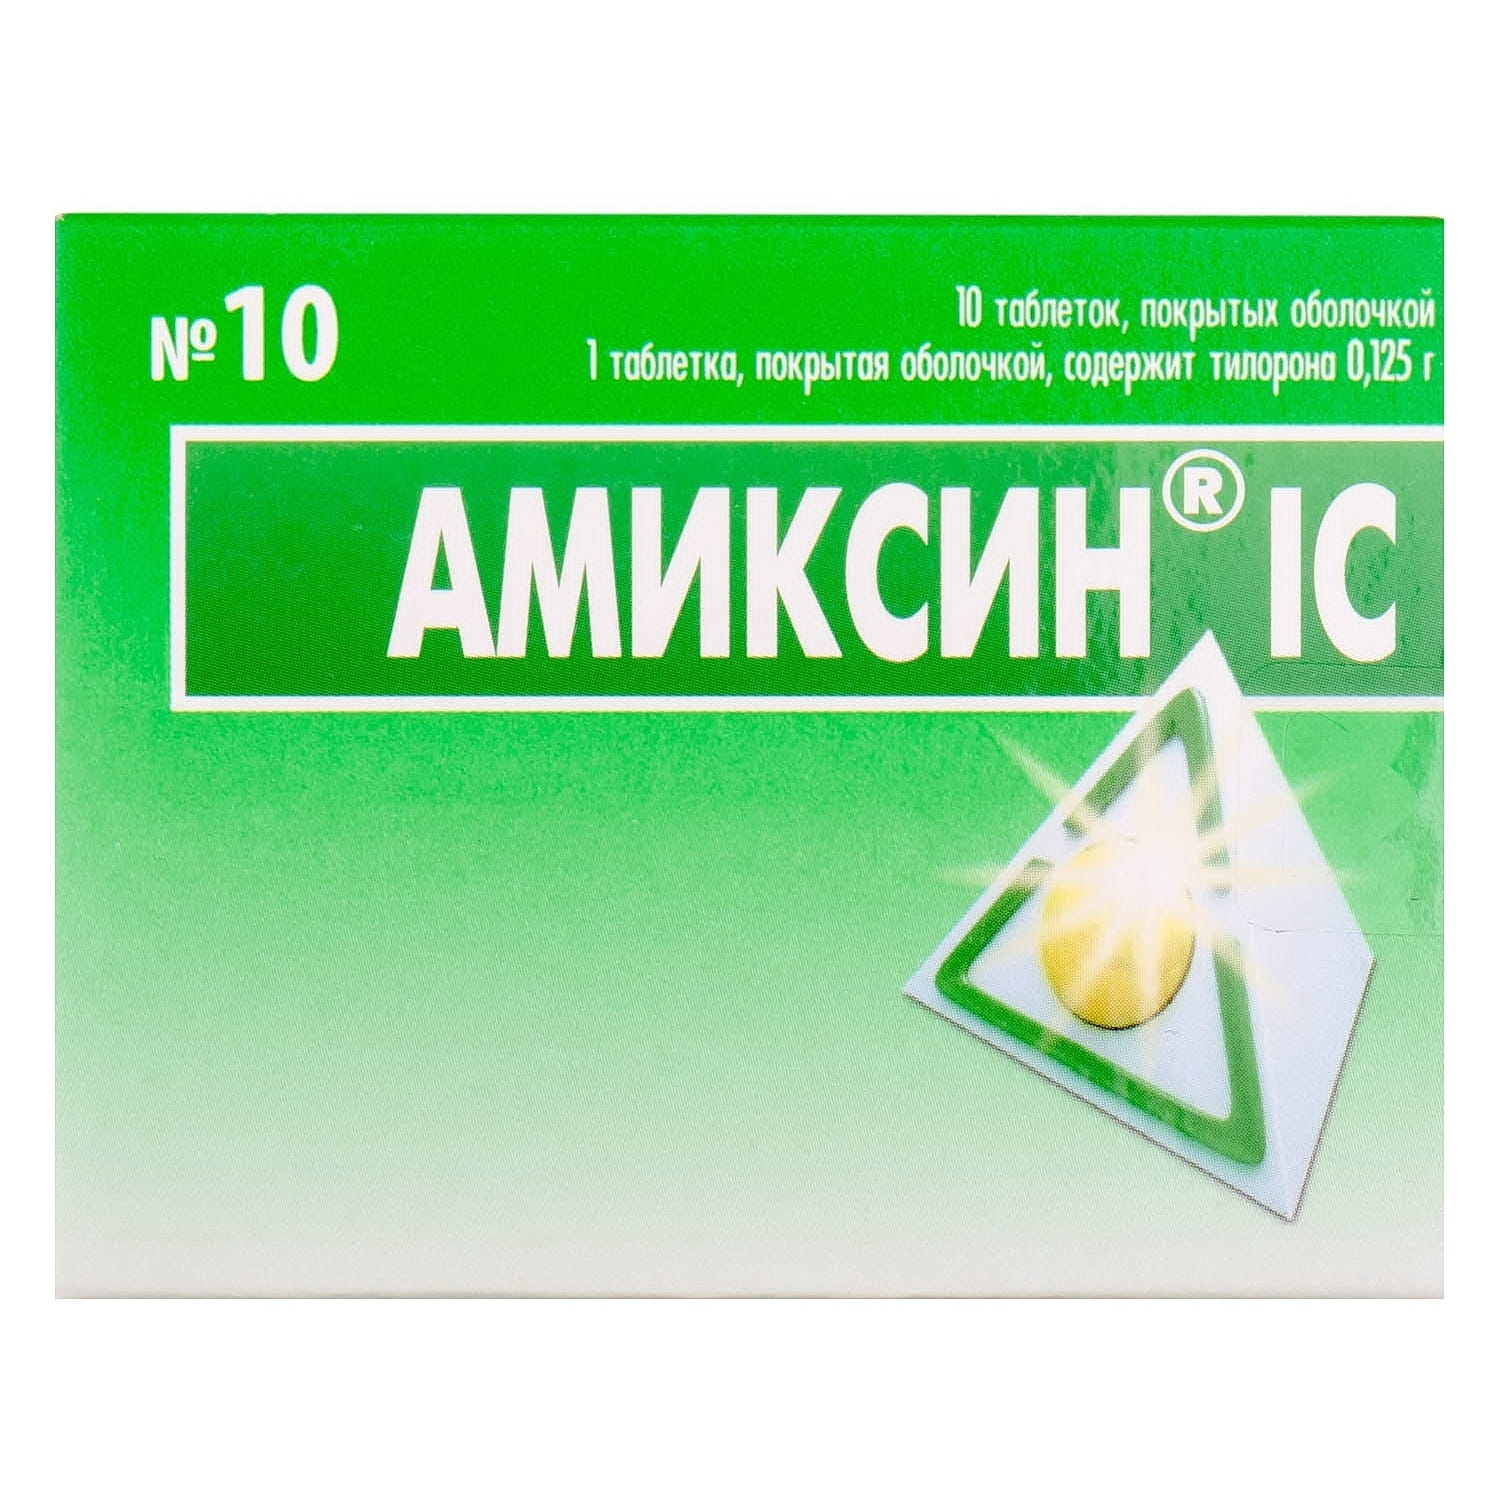 Таблетки Амиксин 125 мг. Амиксин ic. Амиксин 60. Амиксин аналоги таблетки. Как пить амиксин взрослому